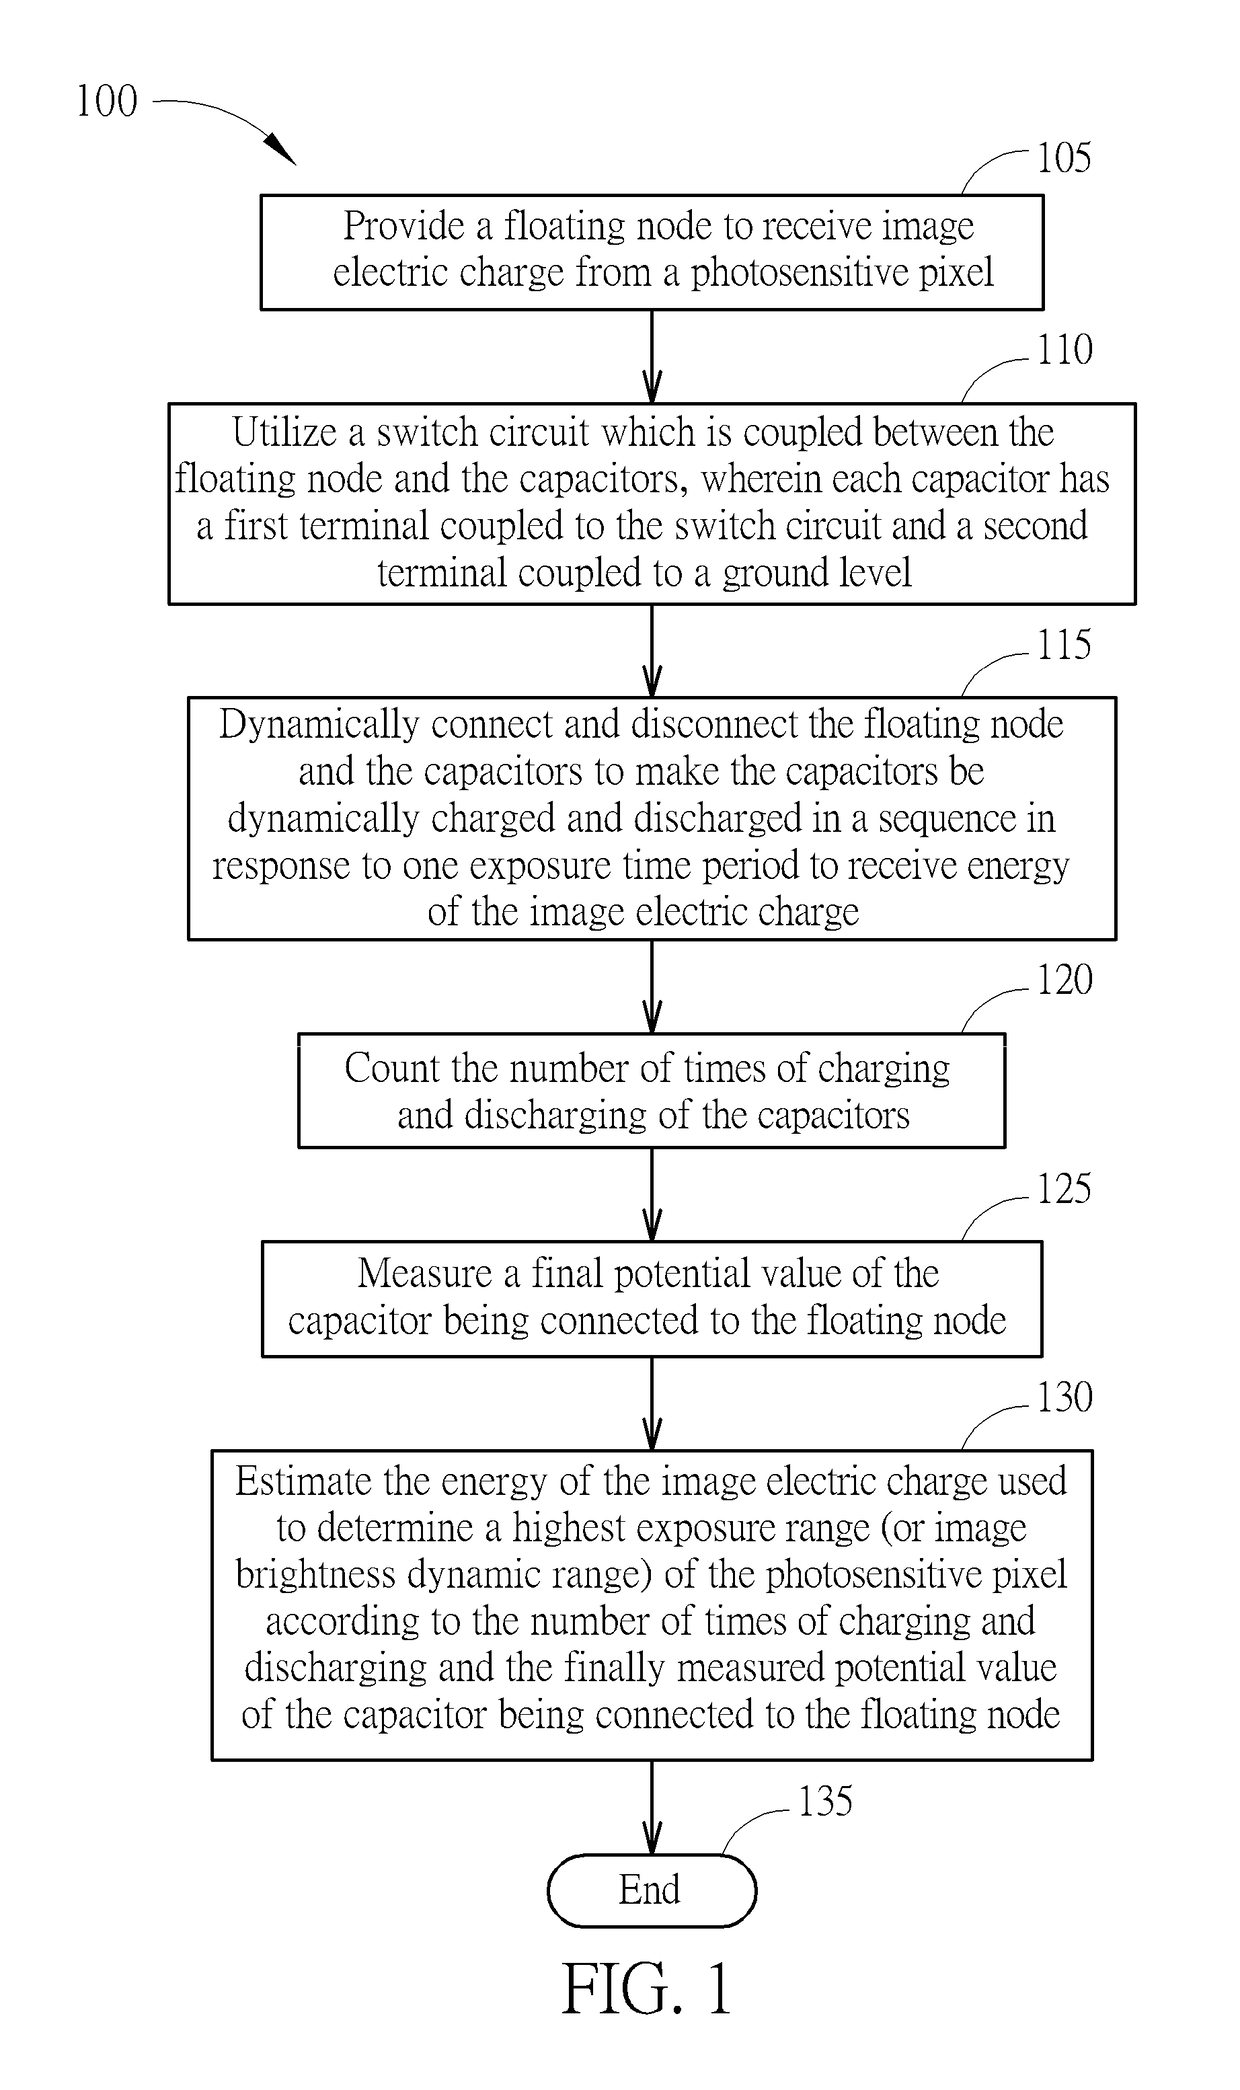 Image sensing circuit and method capable of obtaining higher image brightness dynamic range